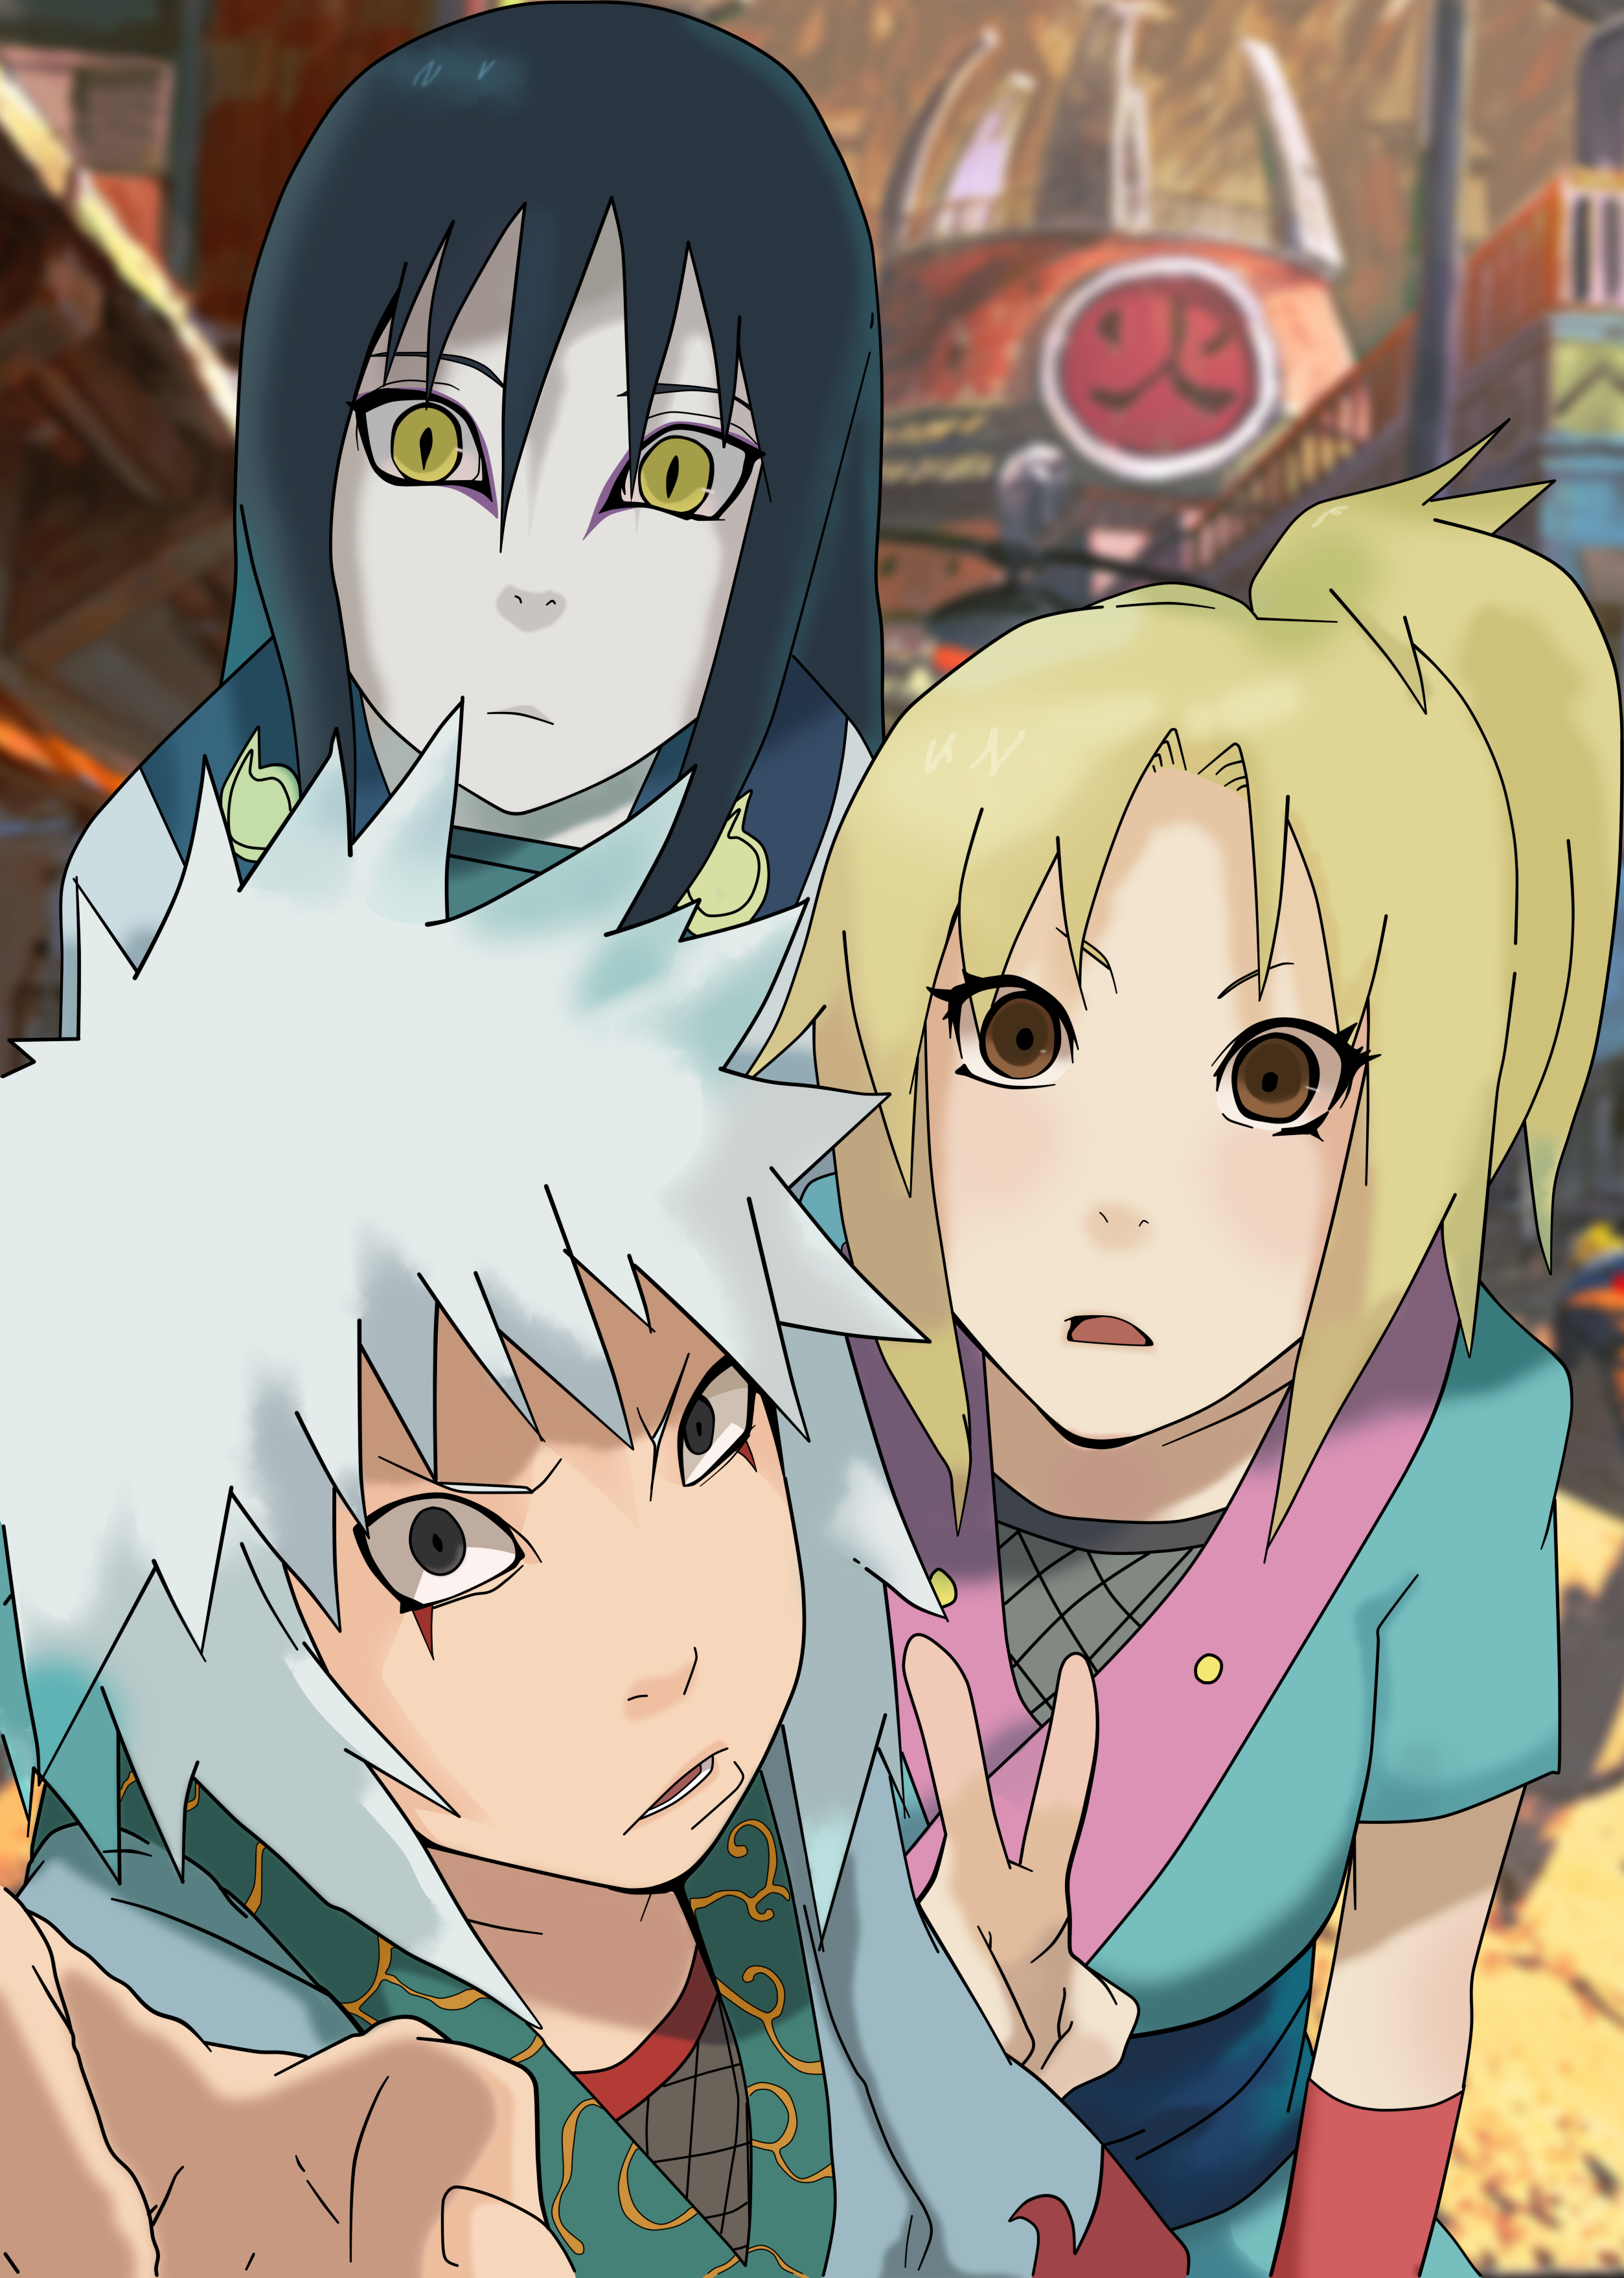 Anime 2507x3516 anime Tsunade Orochimaru Jiraiya Naruto Shippuden yellow eyes hand gesture dark hair anime girls